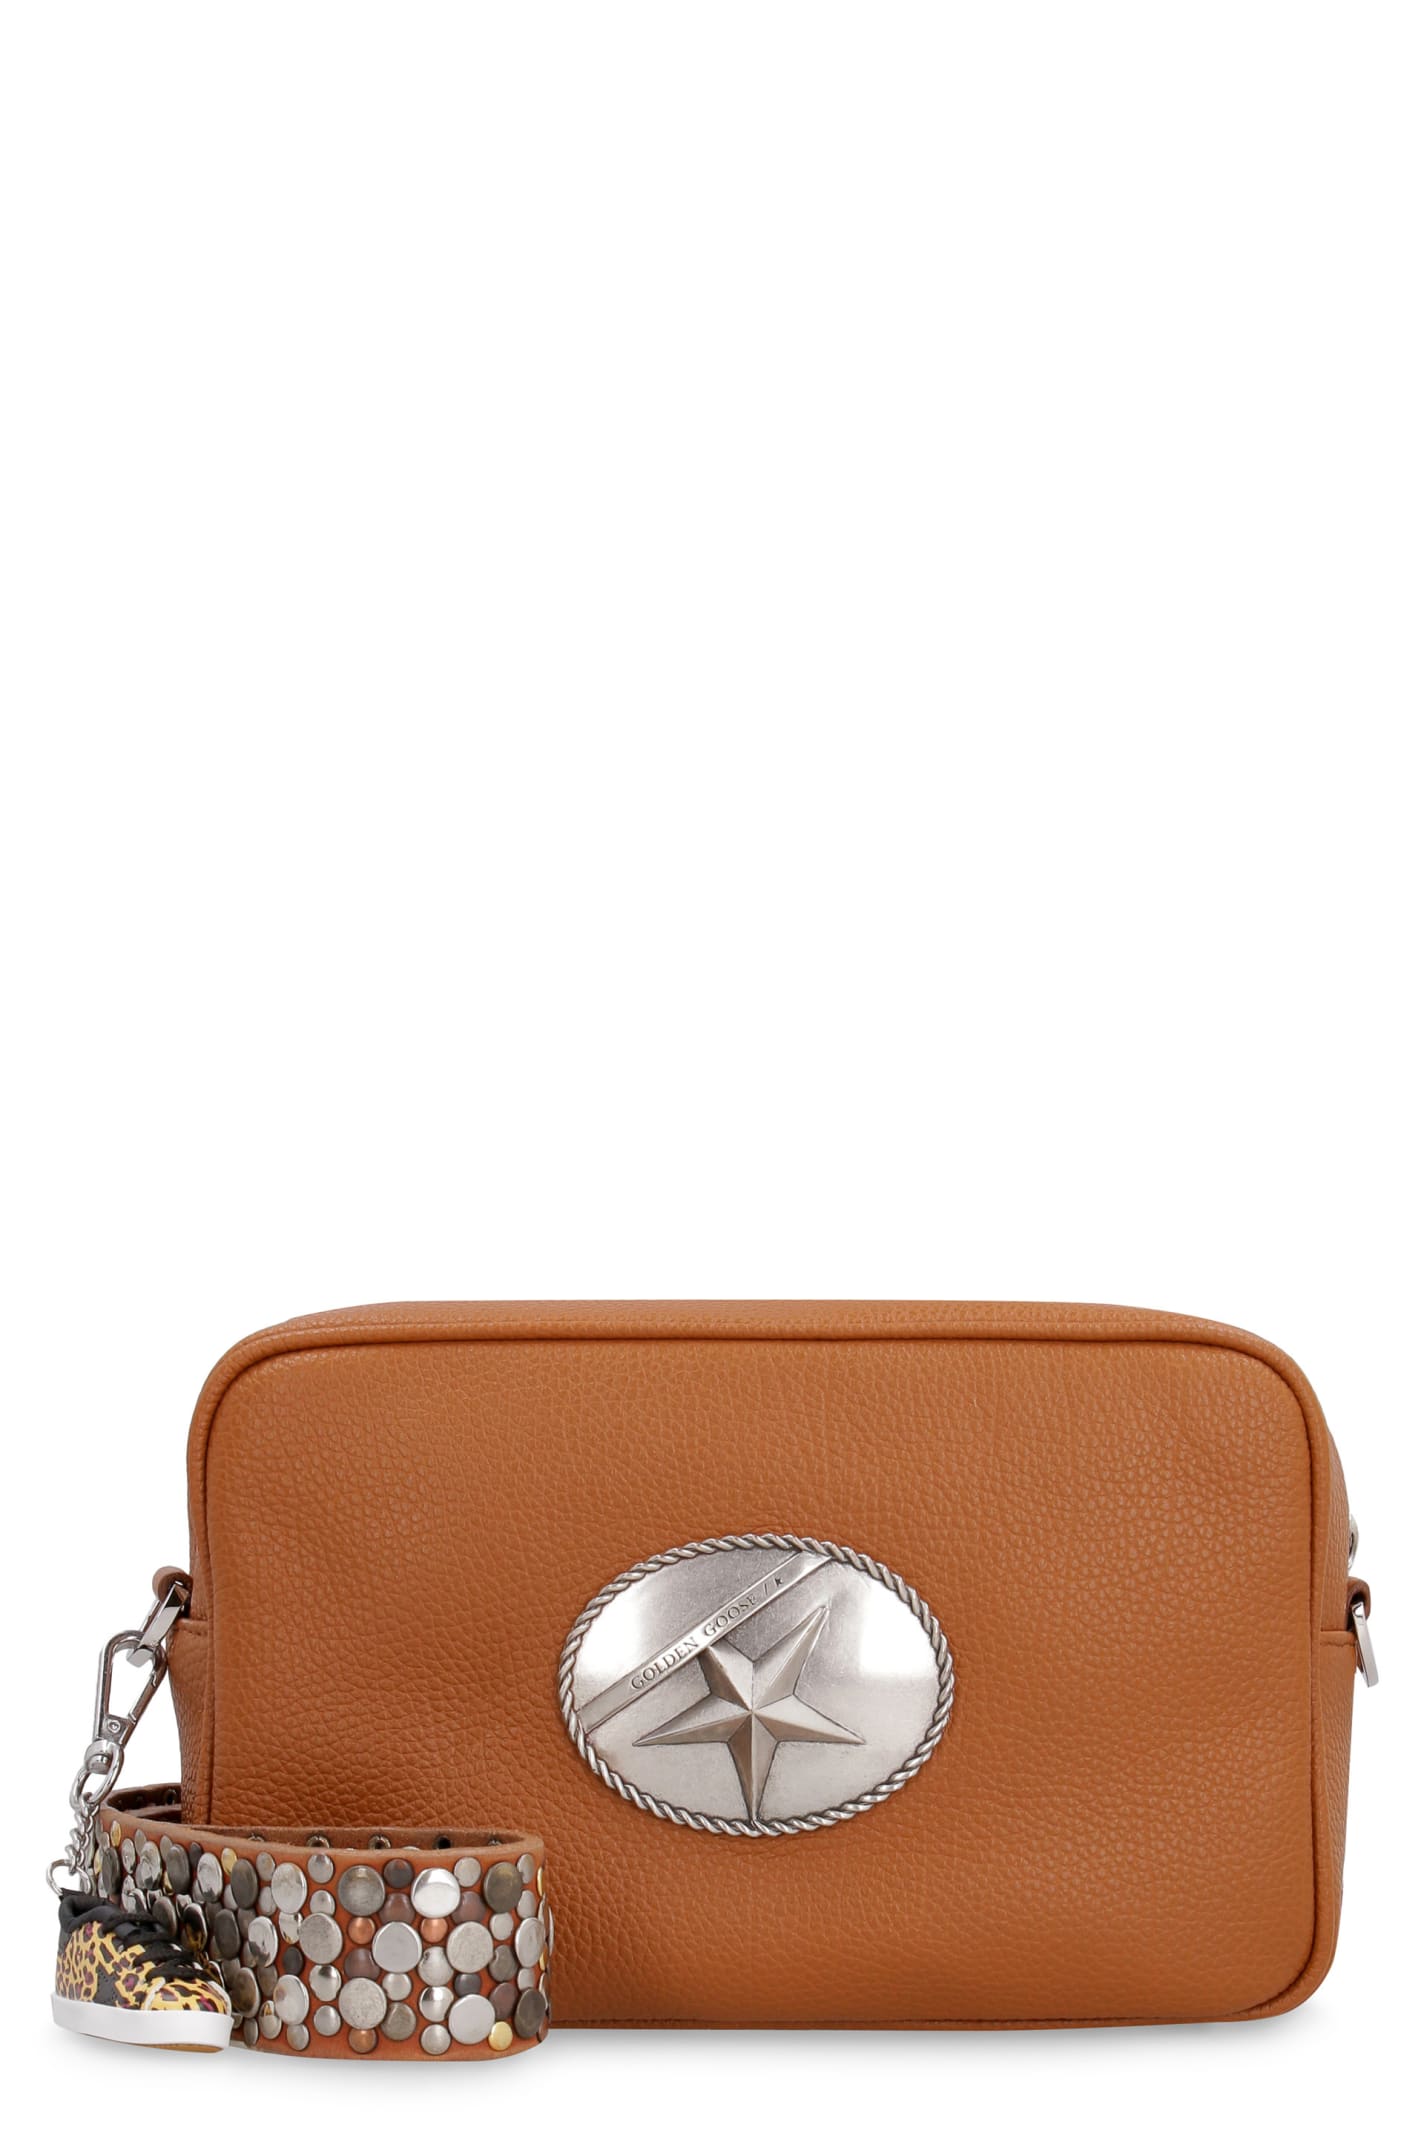 Golden Goose Leather Crossbody Star Bag